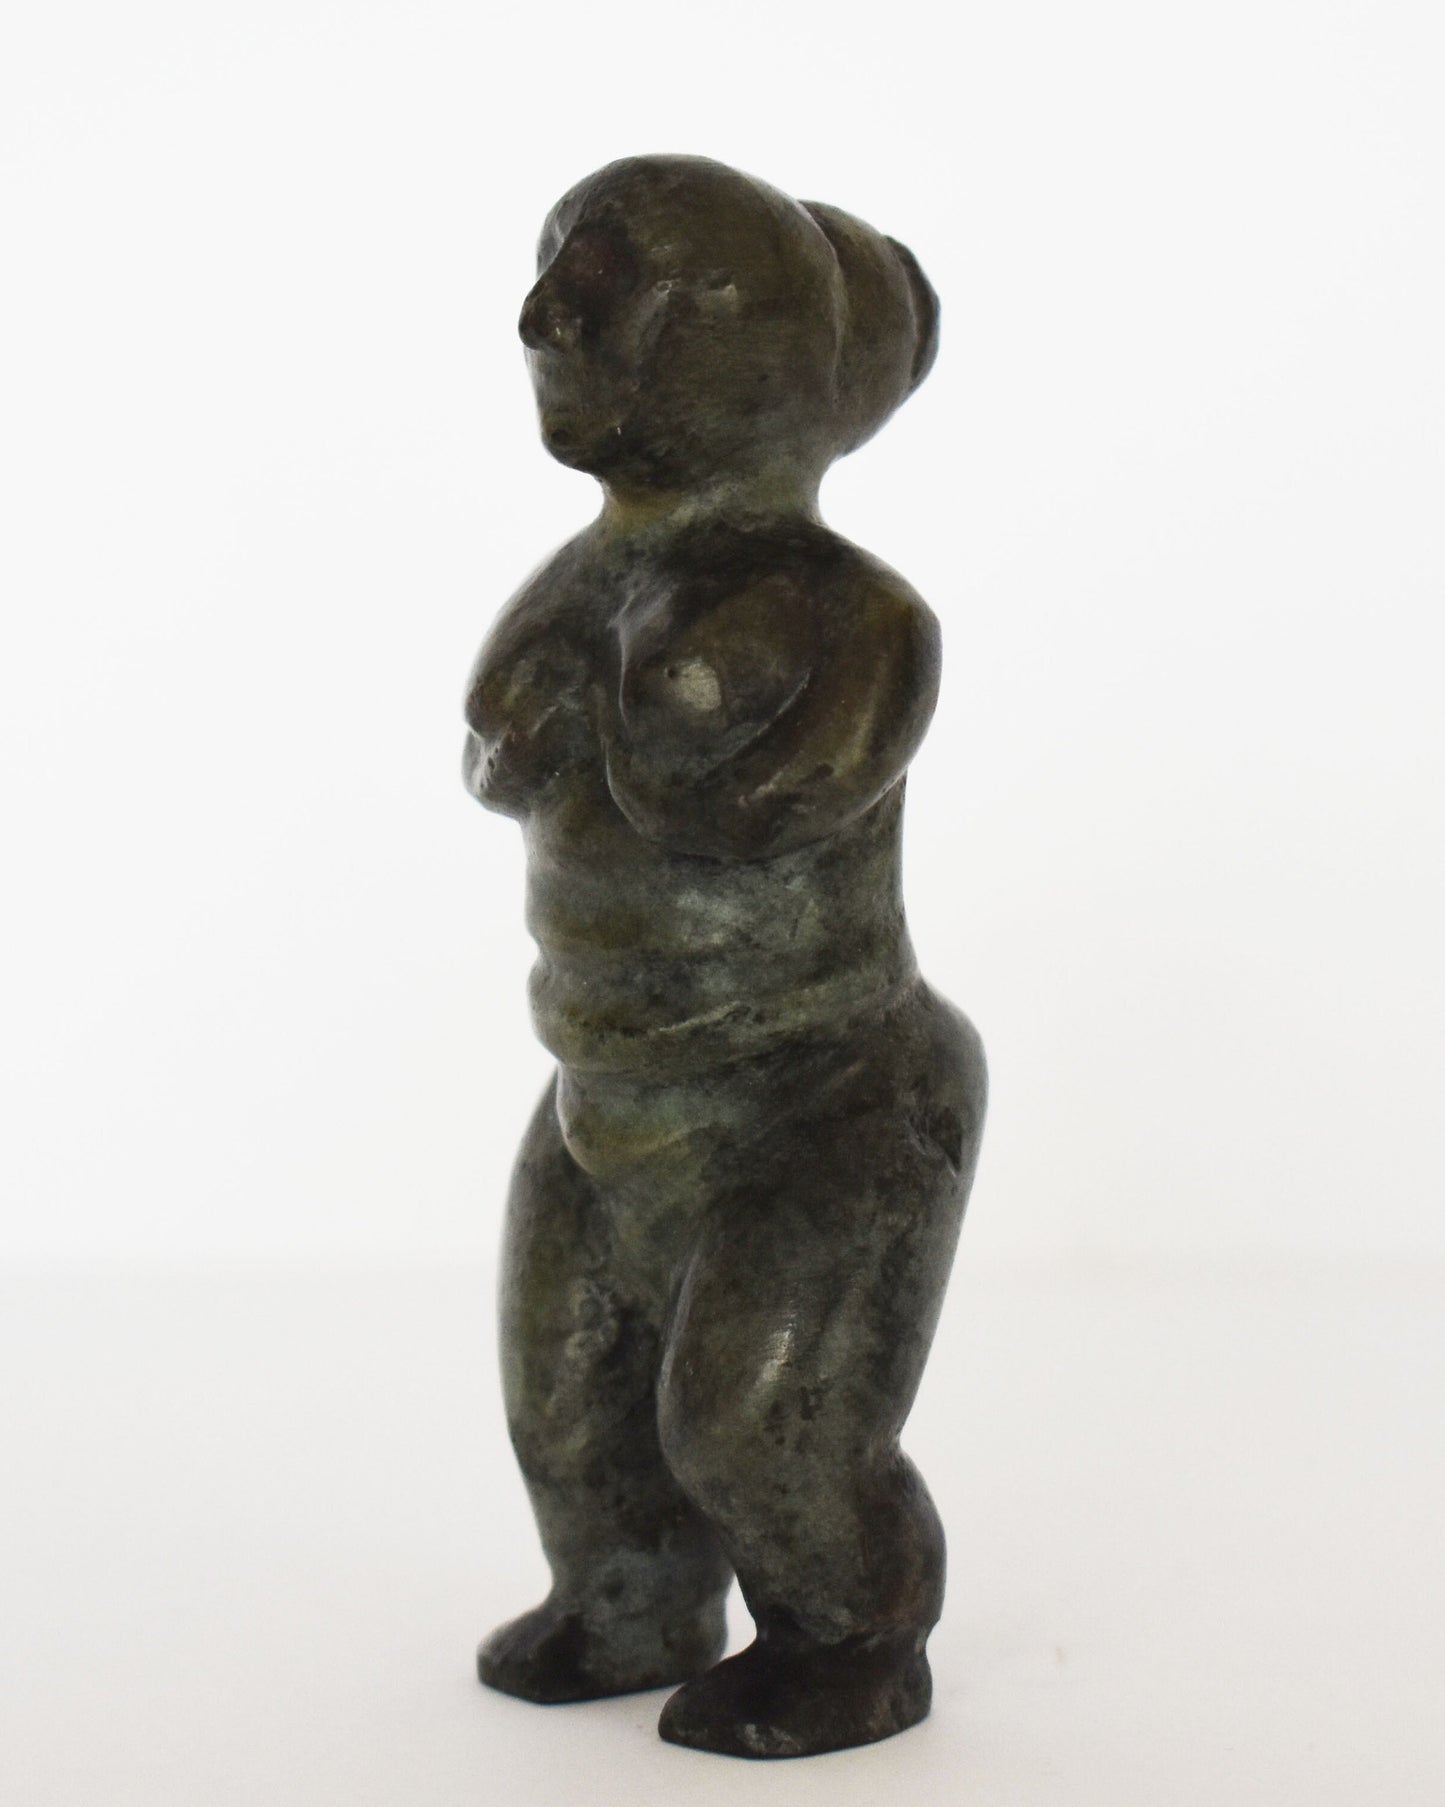 Paleolithic Female Figurine - Fertility Statue - Ancient Greek Reproduction - Miniature - pure bronze sculpture